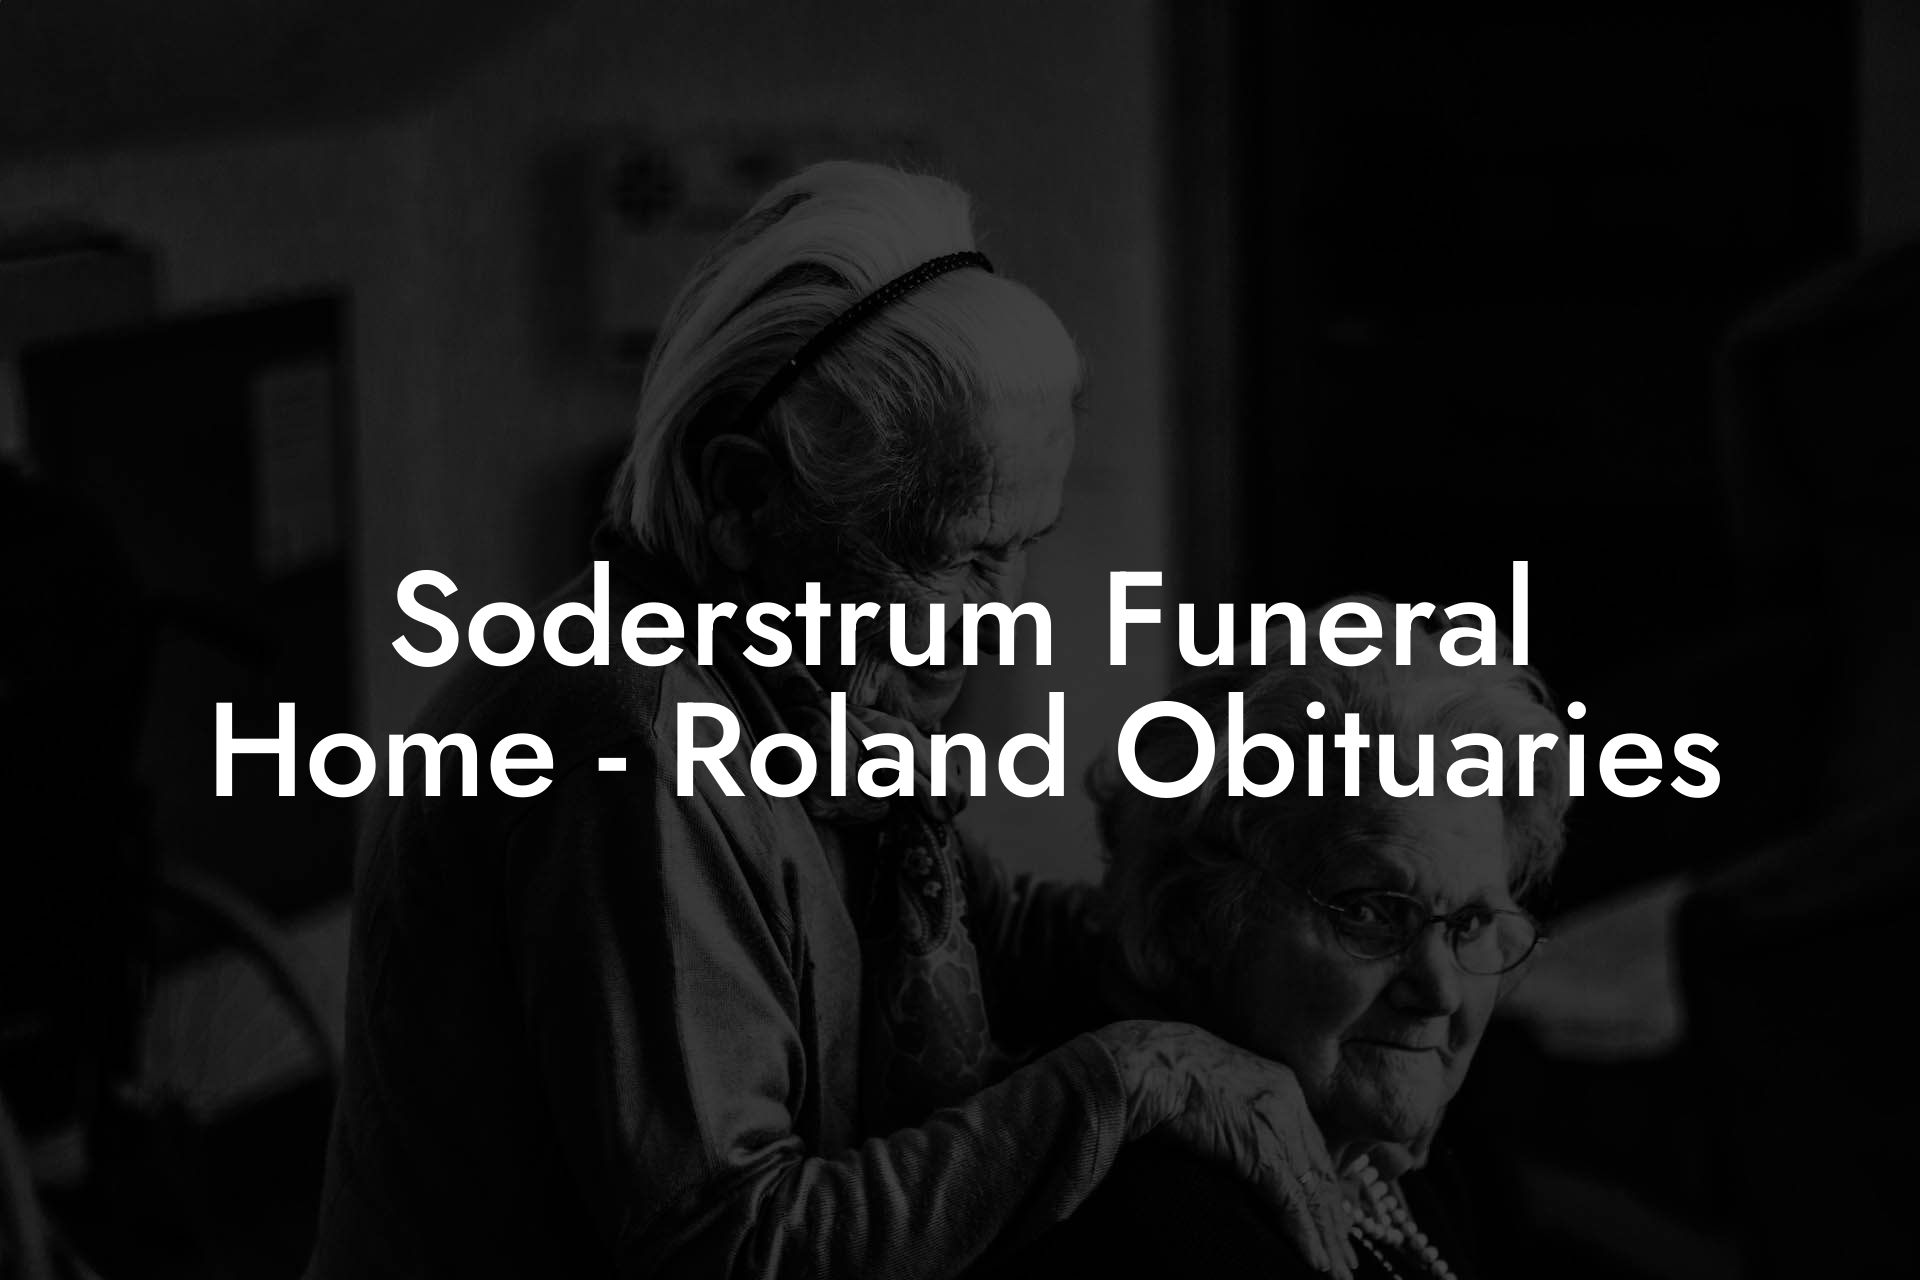 Soderstrum Funeral Home - Roland Obituaries